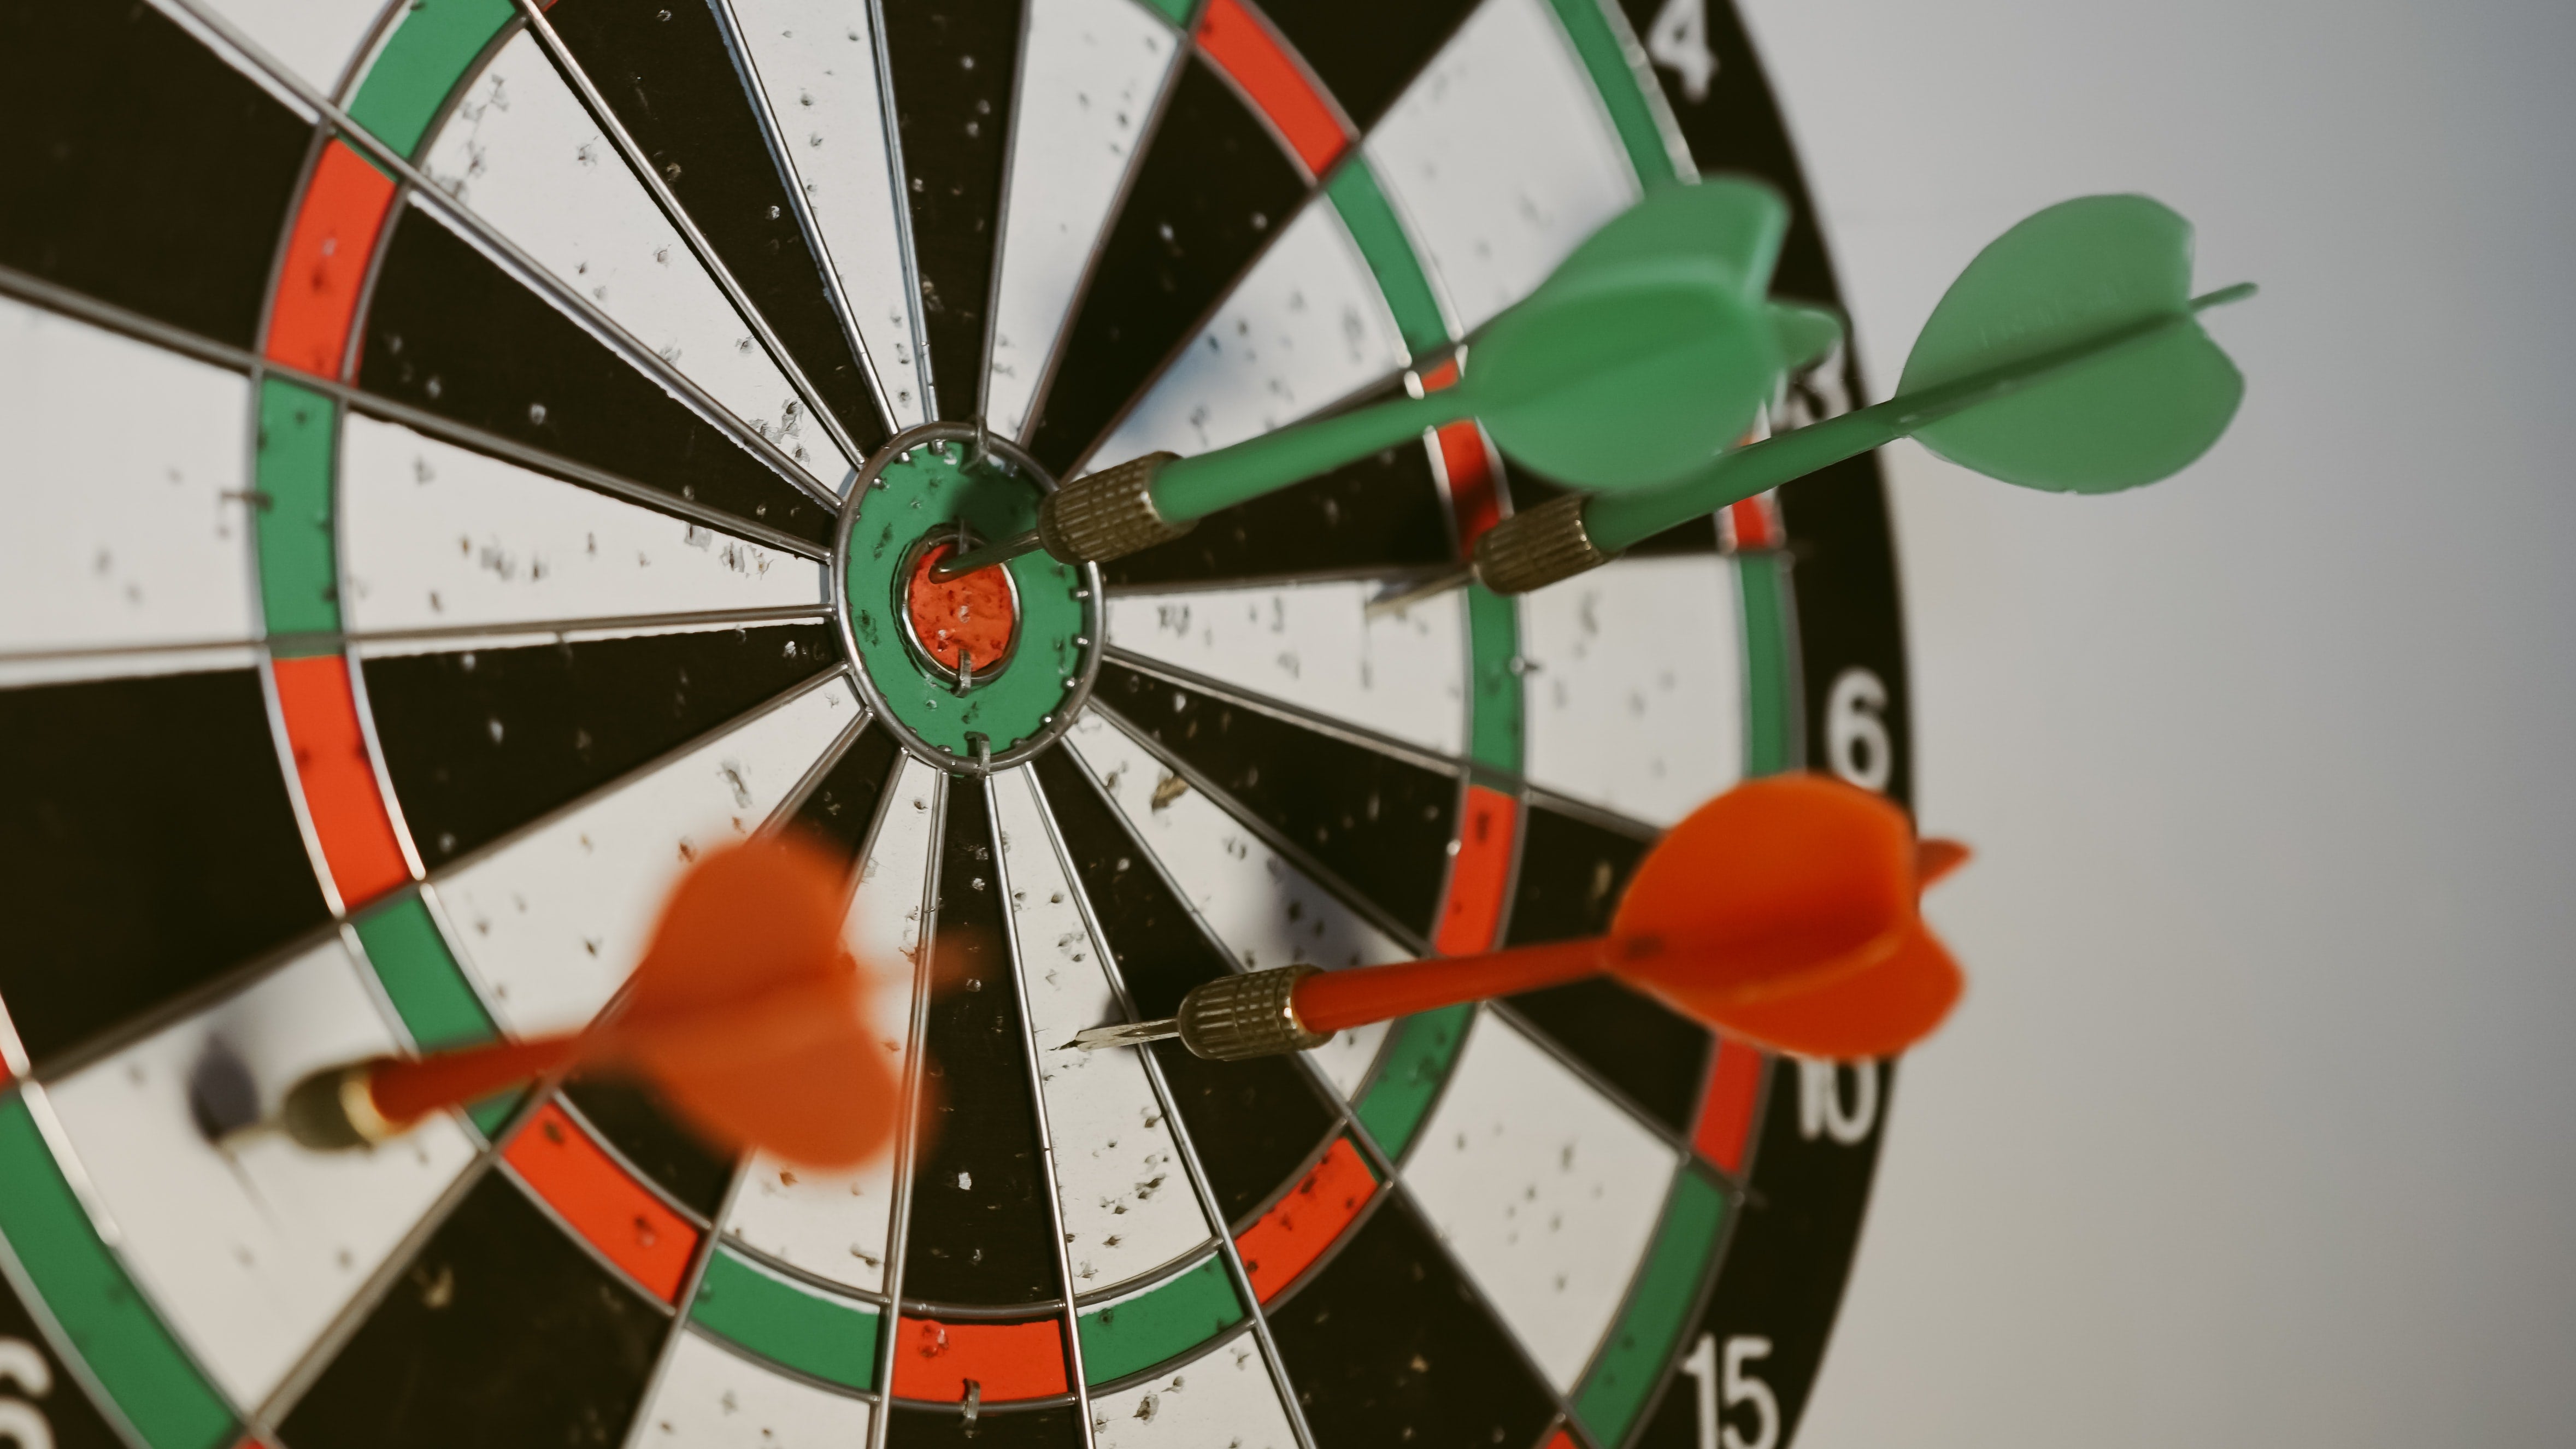 darts embedded in a dart board- one bull's eye